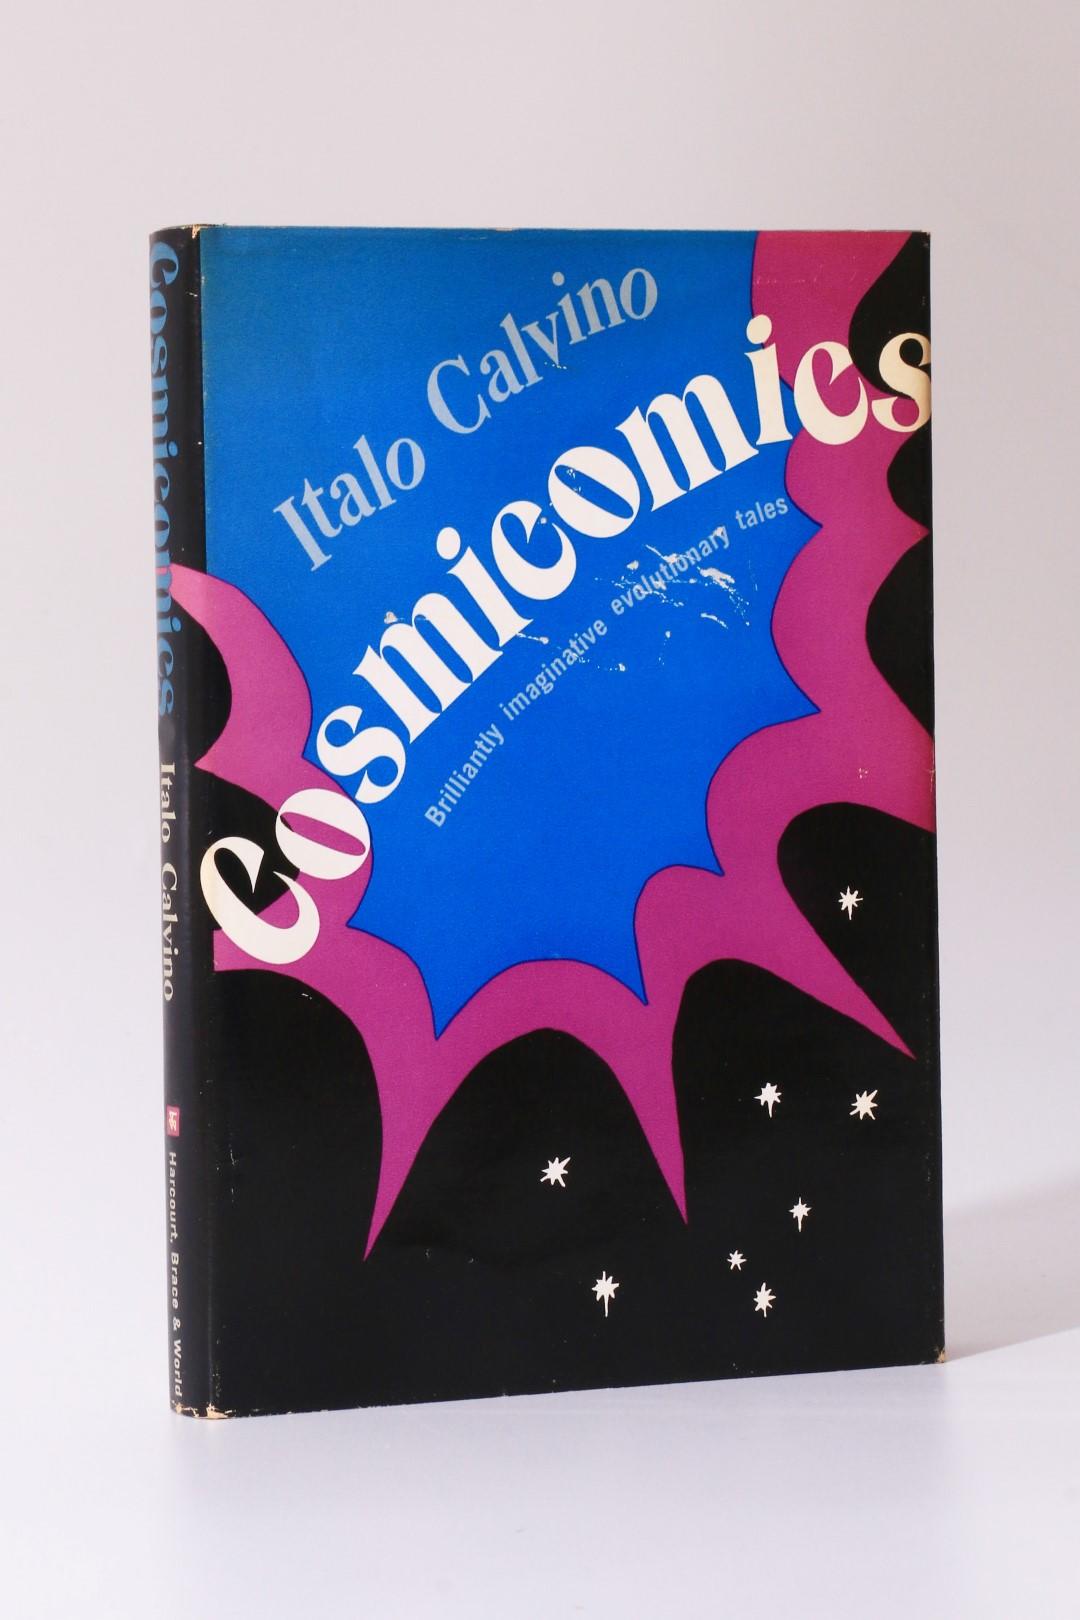 Italo Calvino - Cosmicomics - Harcourt, Brace & World, 1968, First Edition.